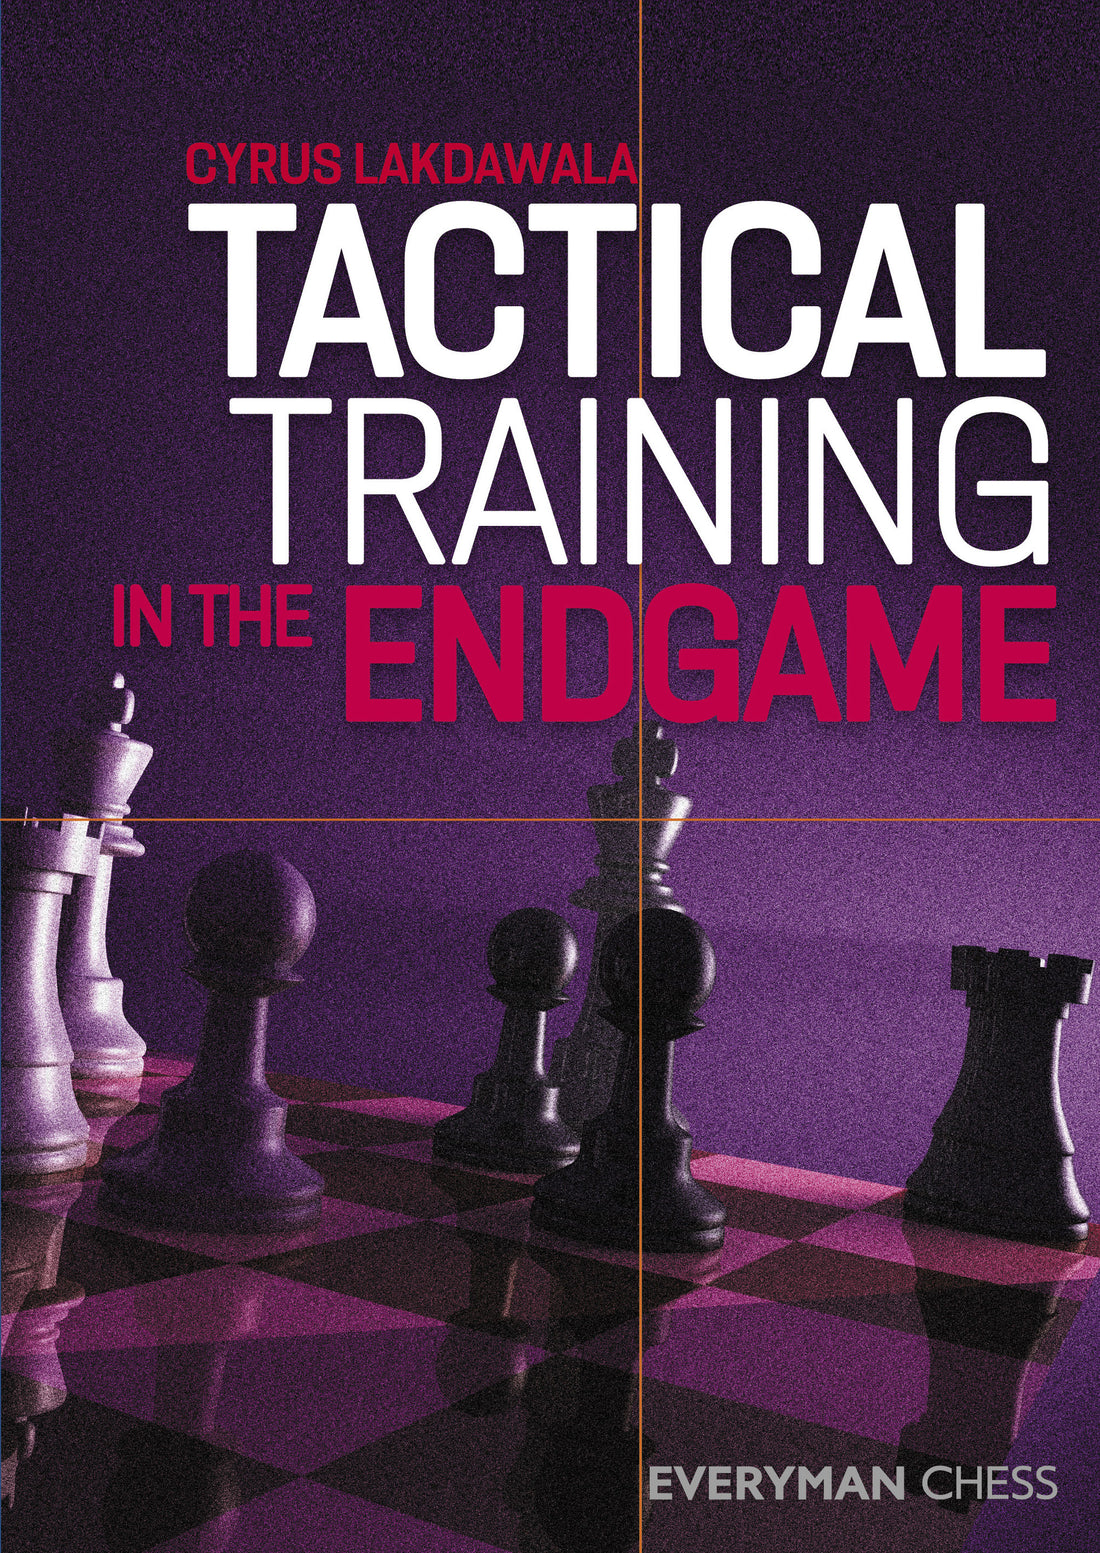 Chess Endgame Simulations - Interactive Chess Endgame Training